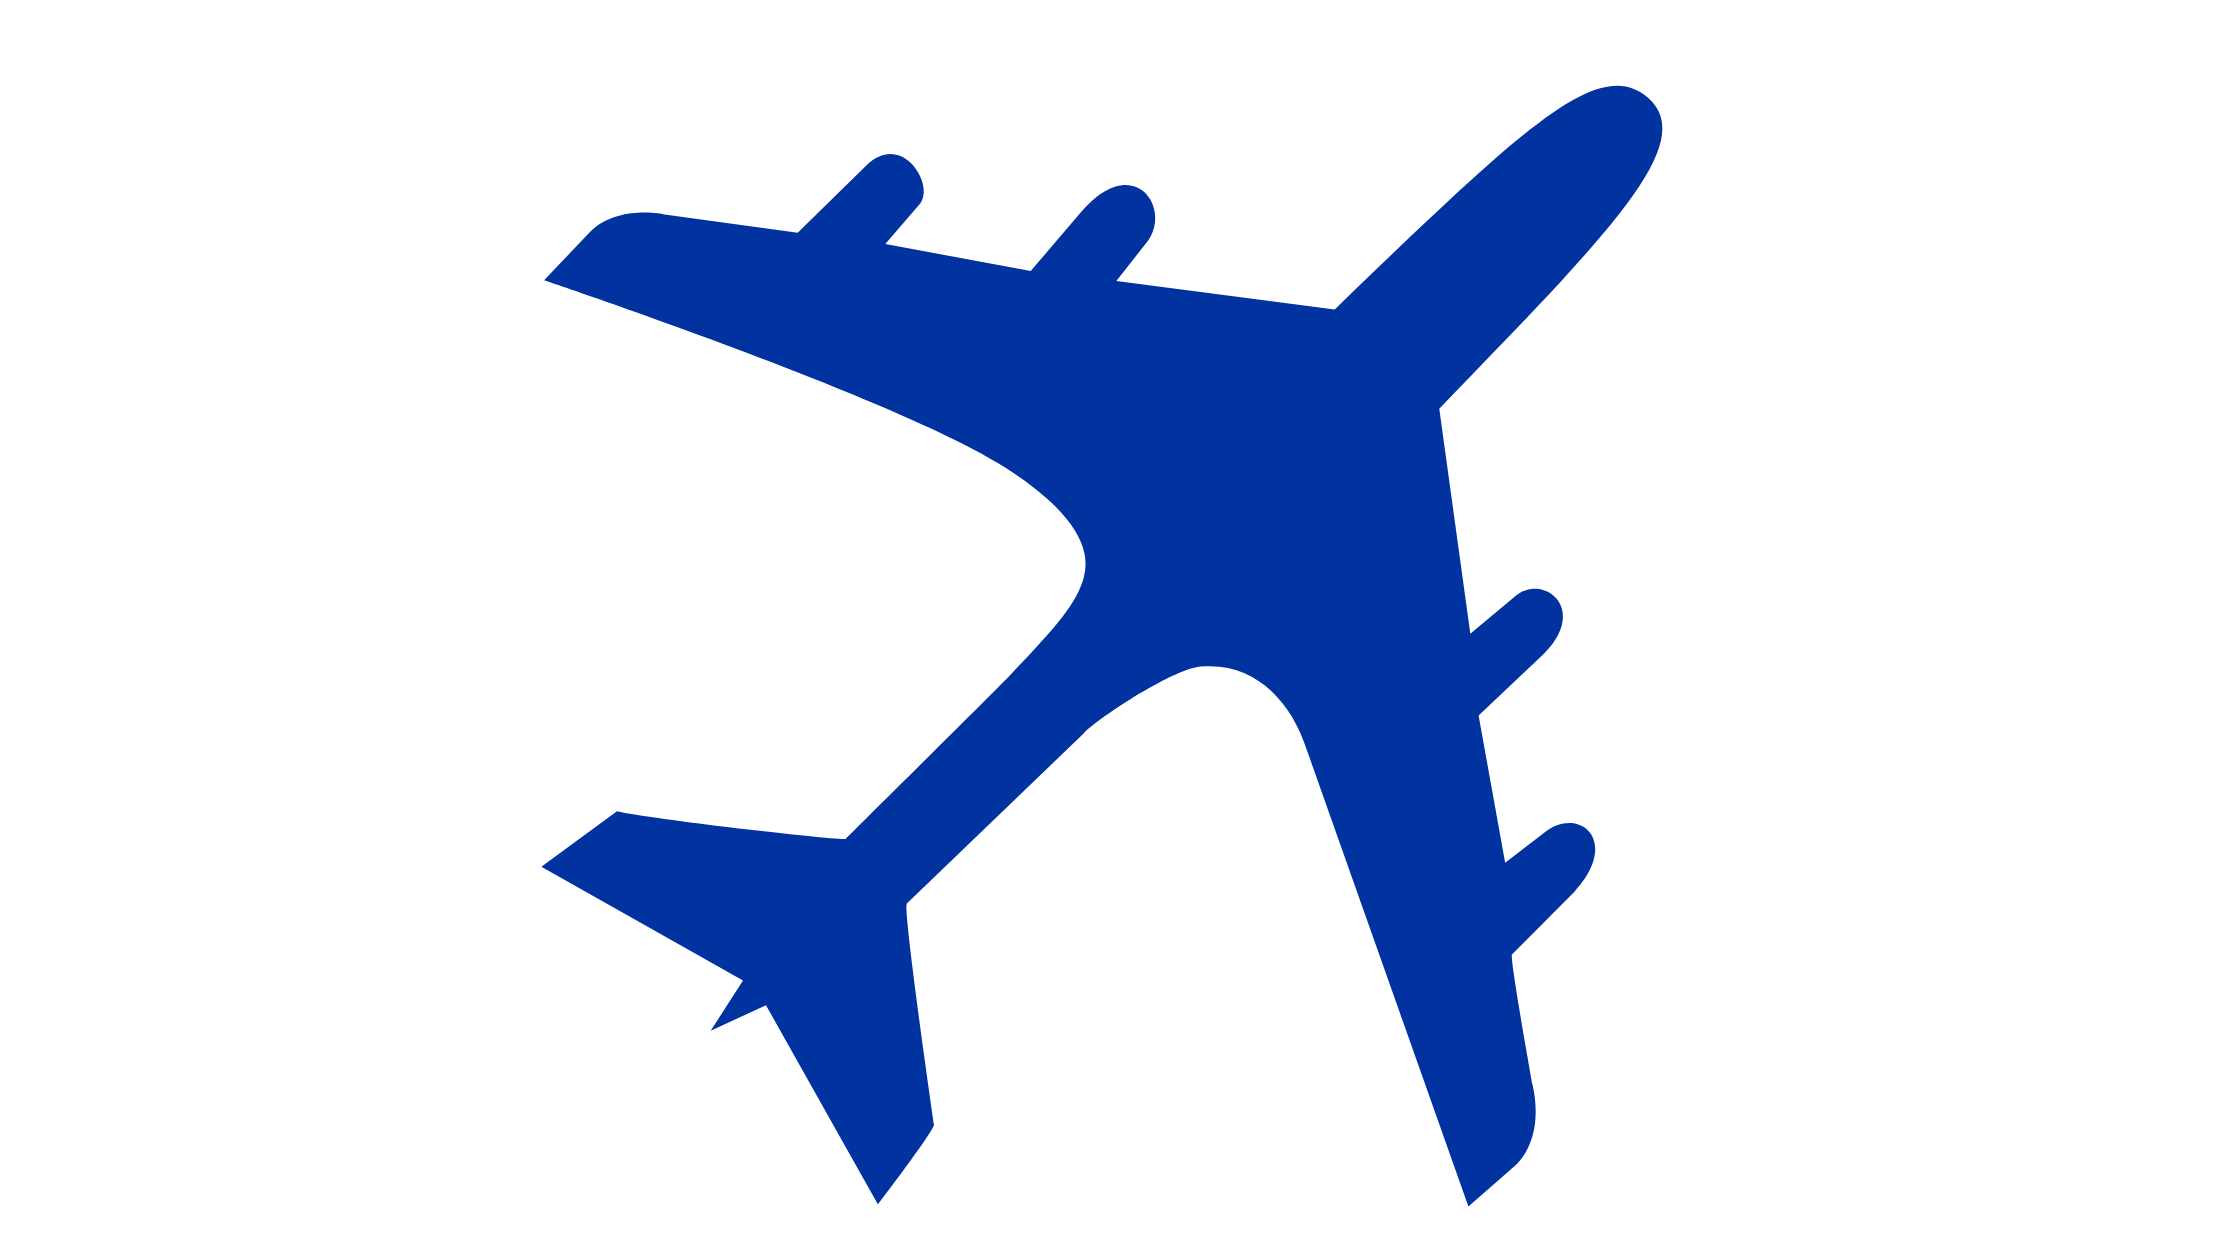 A pictogram of a plane